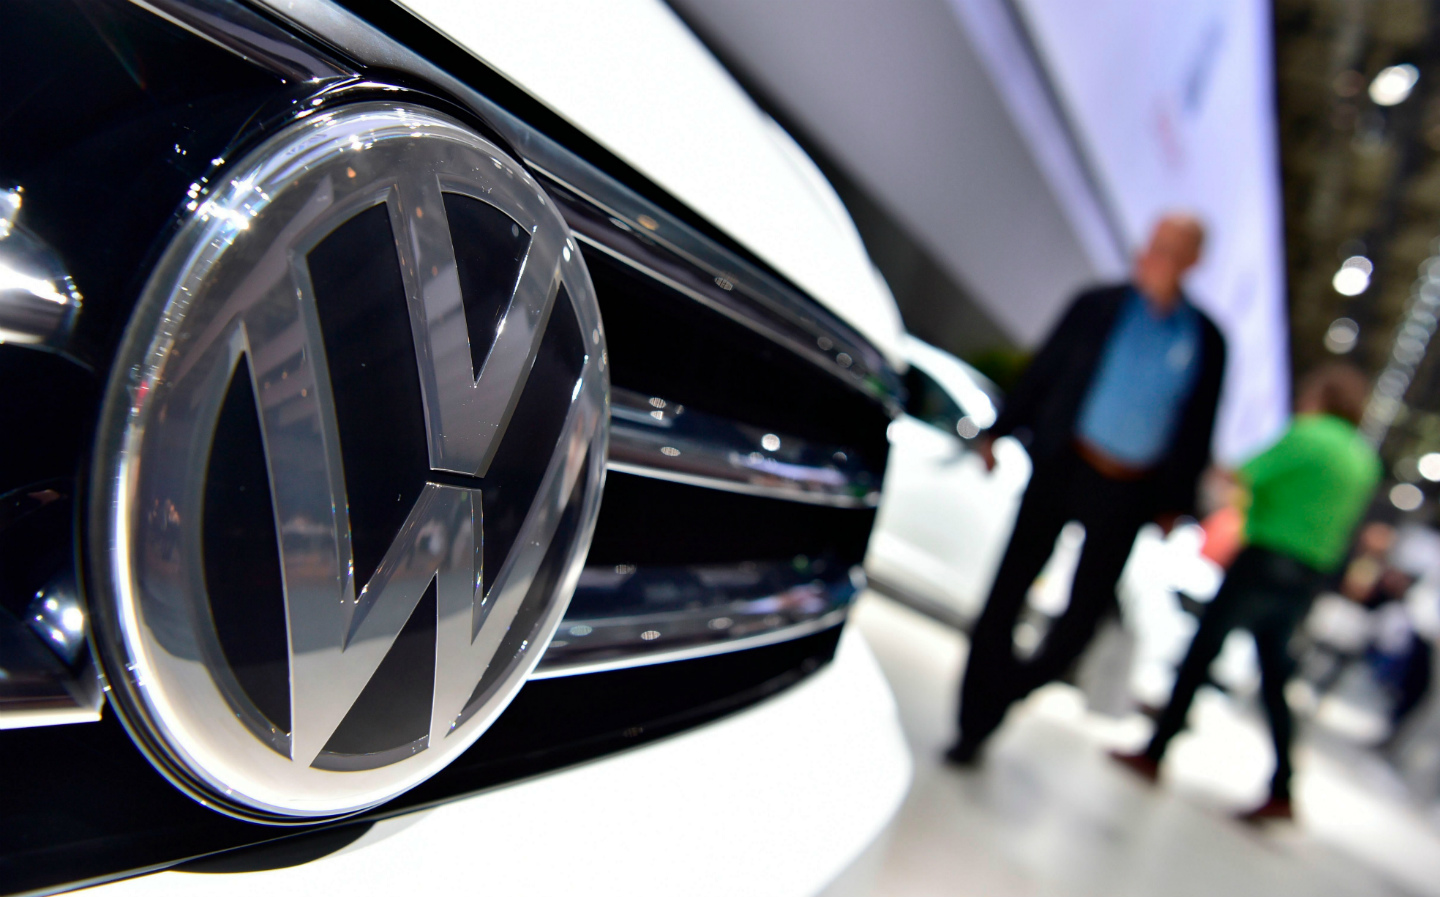 VW admits guilt over ‘repulsive’ diesel fume tests on monkeys